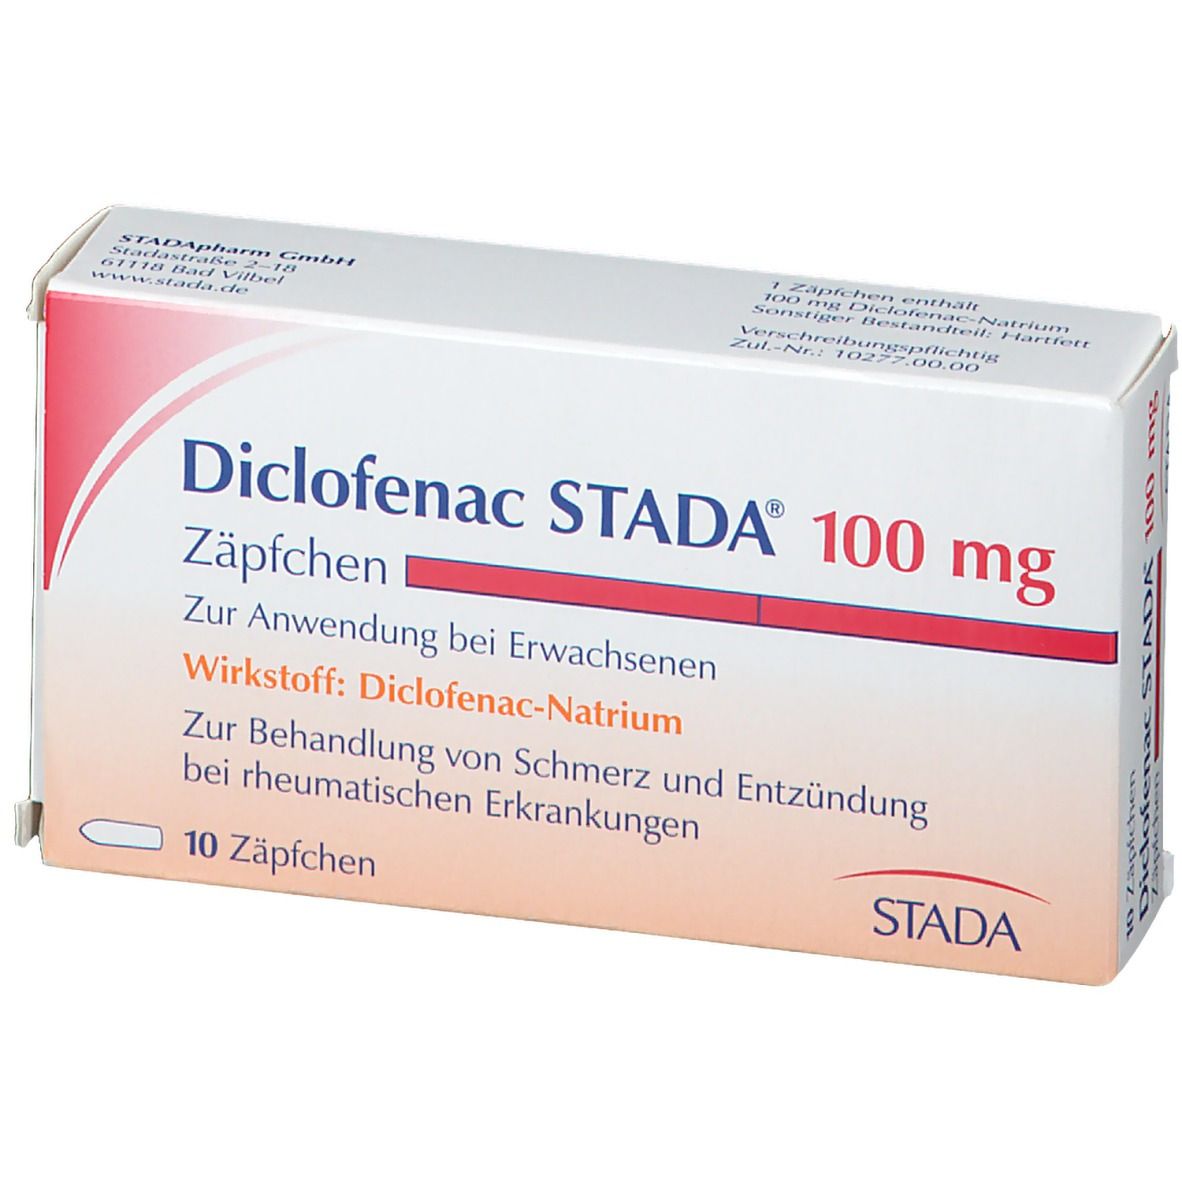 Diclofenac STADA® 100 mg Zäpfchen